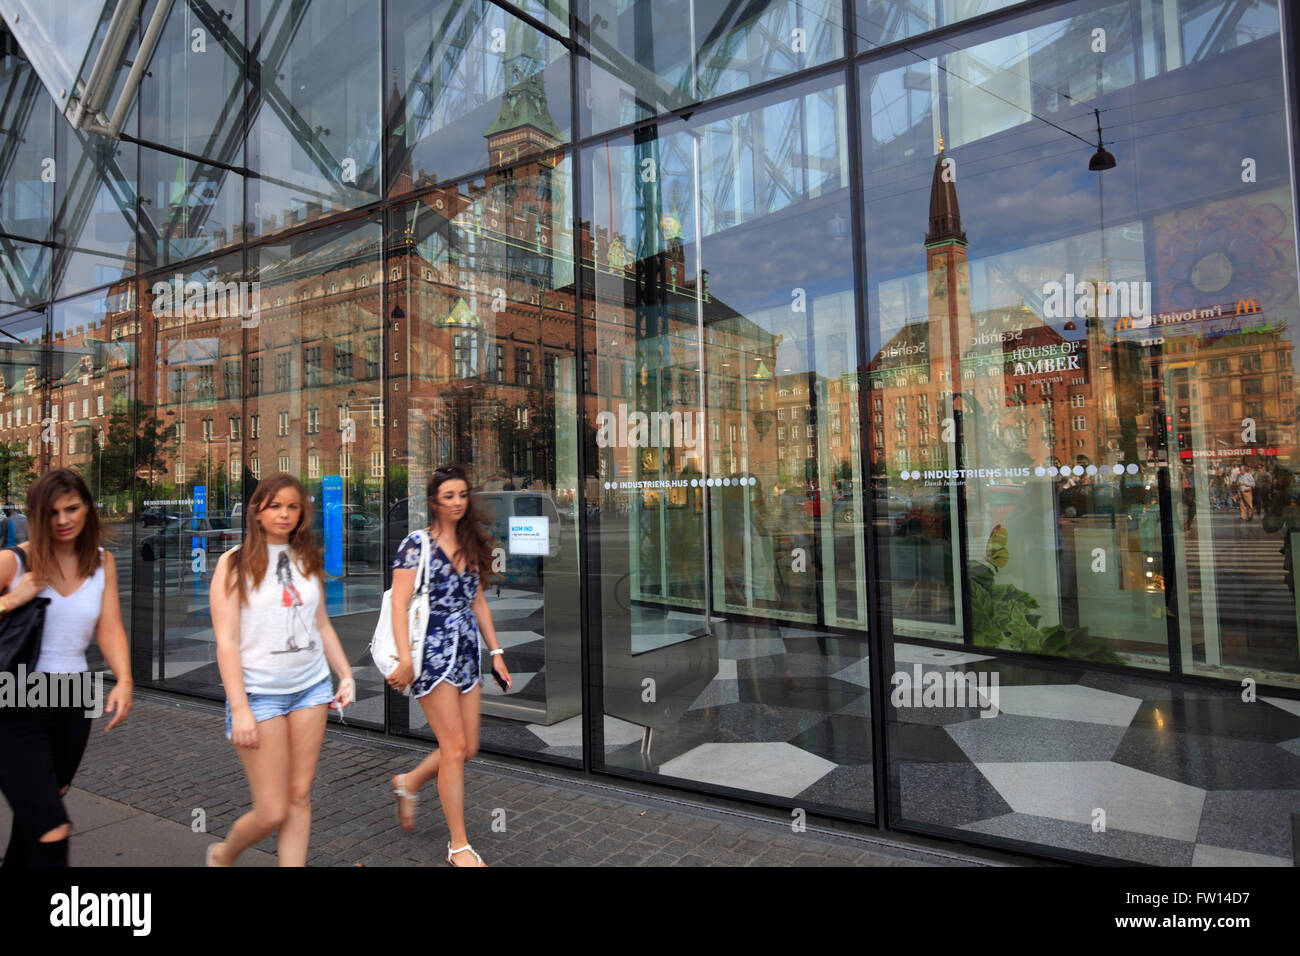 City Hall Square reflected in the windows, Copenhagen, Denmark Stock Photo